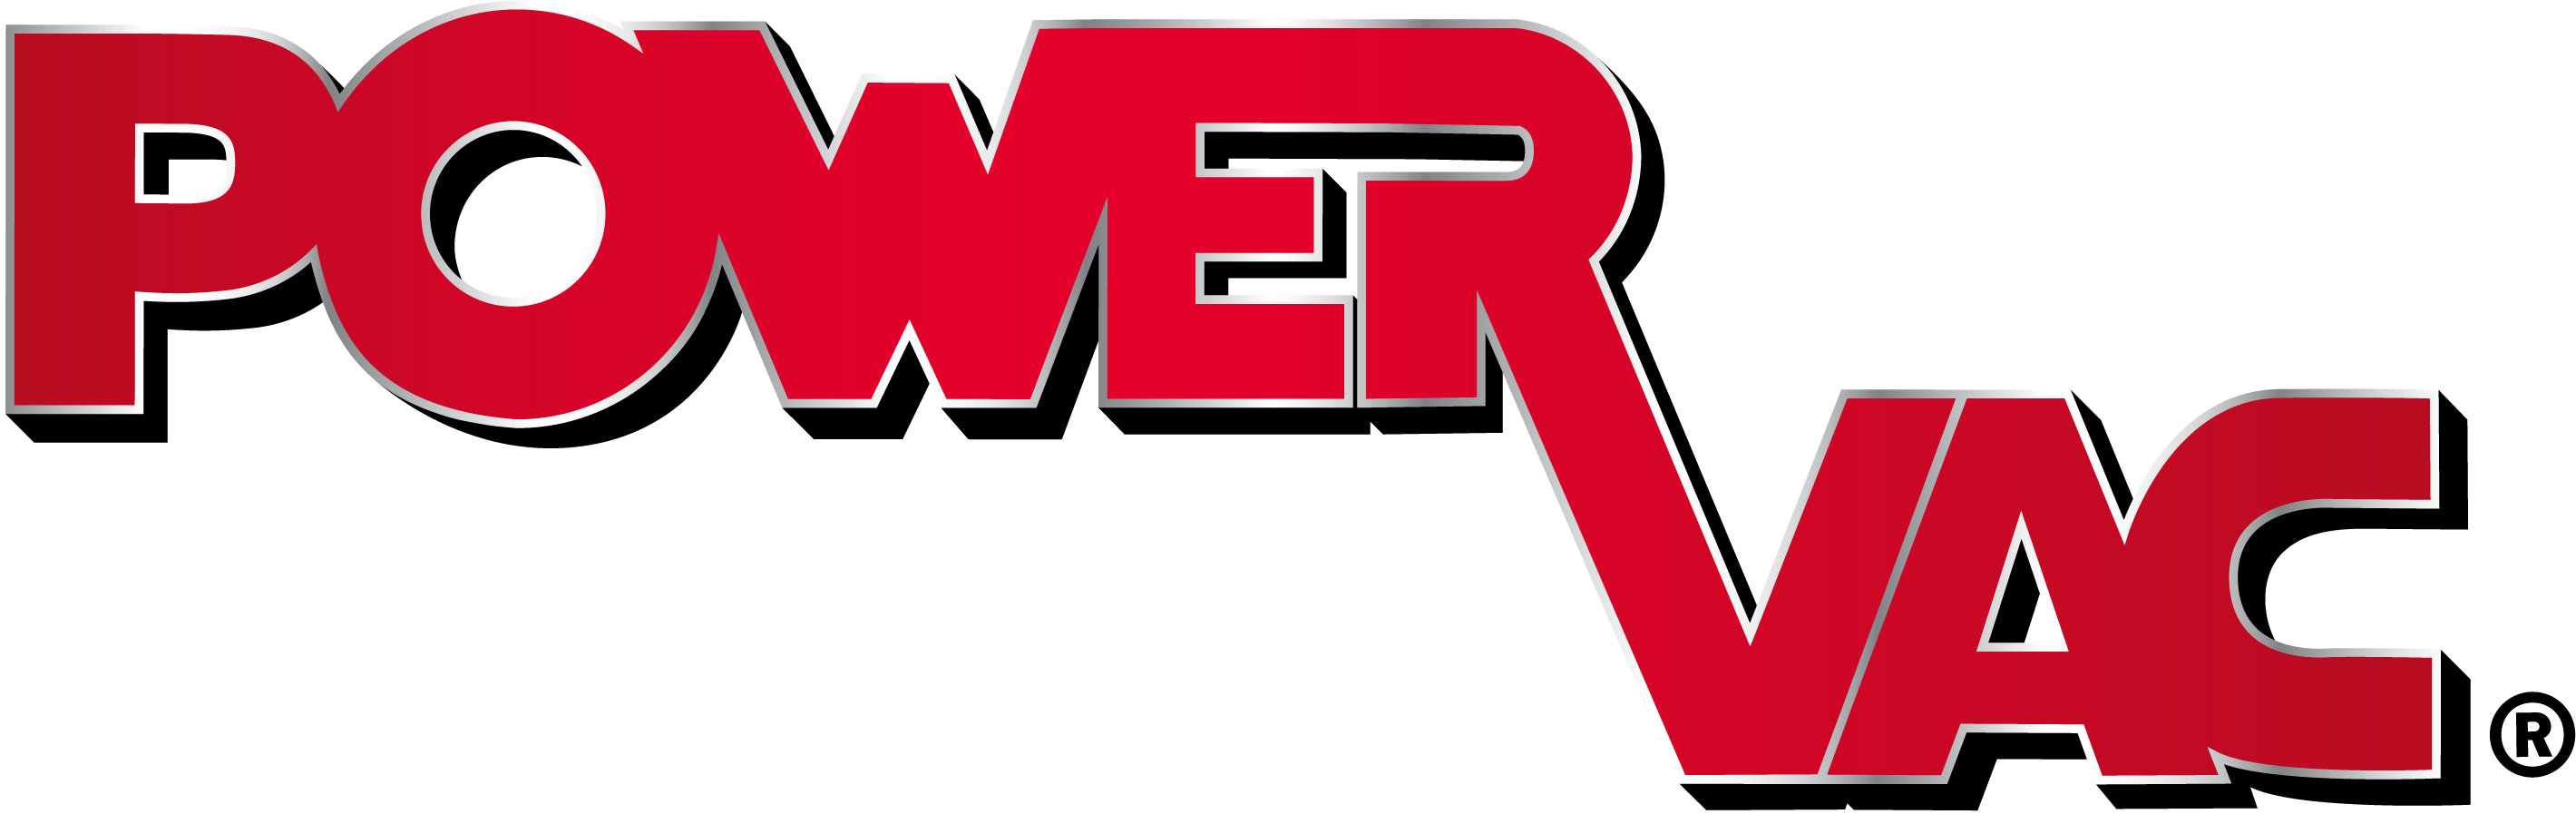 Powervac Logo